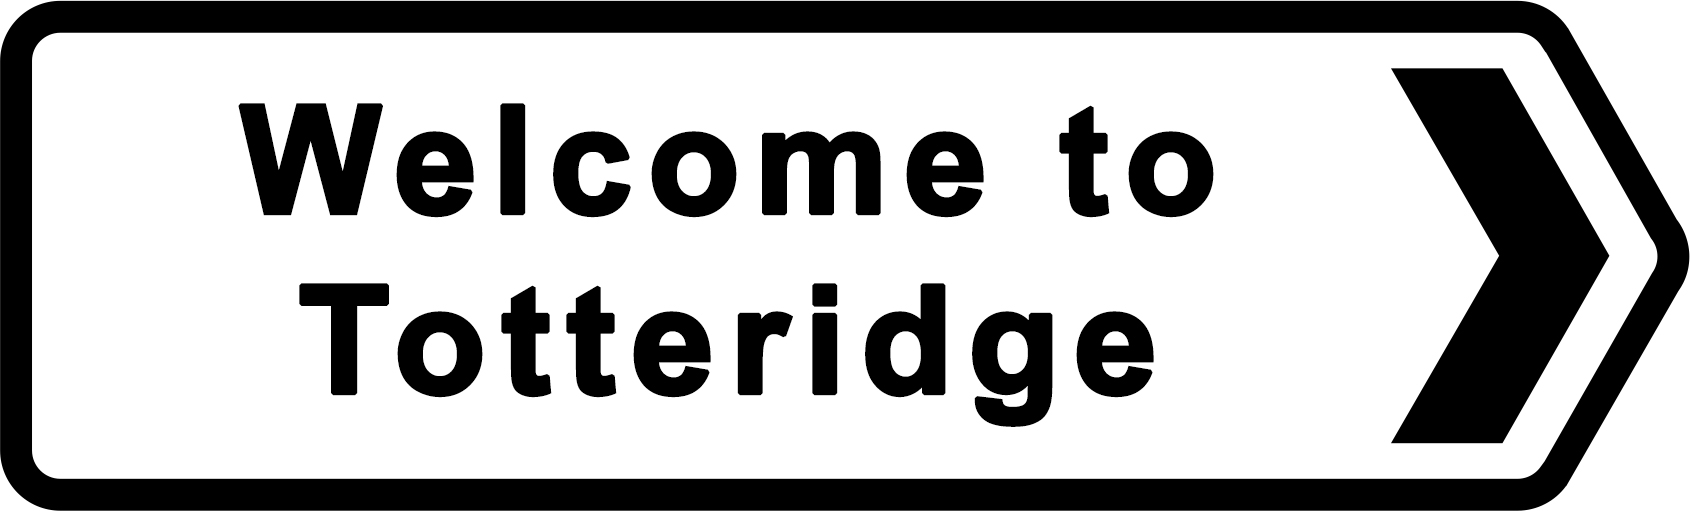 Totteridge and Whetstone tube station - Cheap Driving Schools Lessons in Totteridge and Whetstone, N20, London Borough of Barnet, Hertfordshire, Greater London